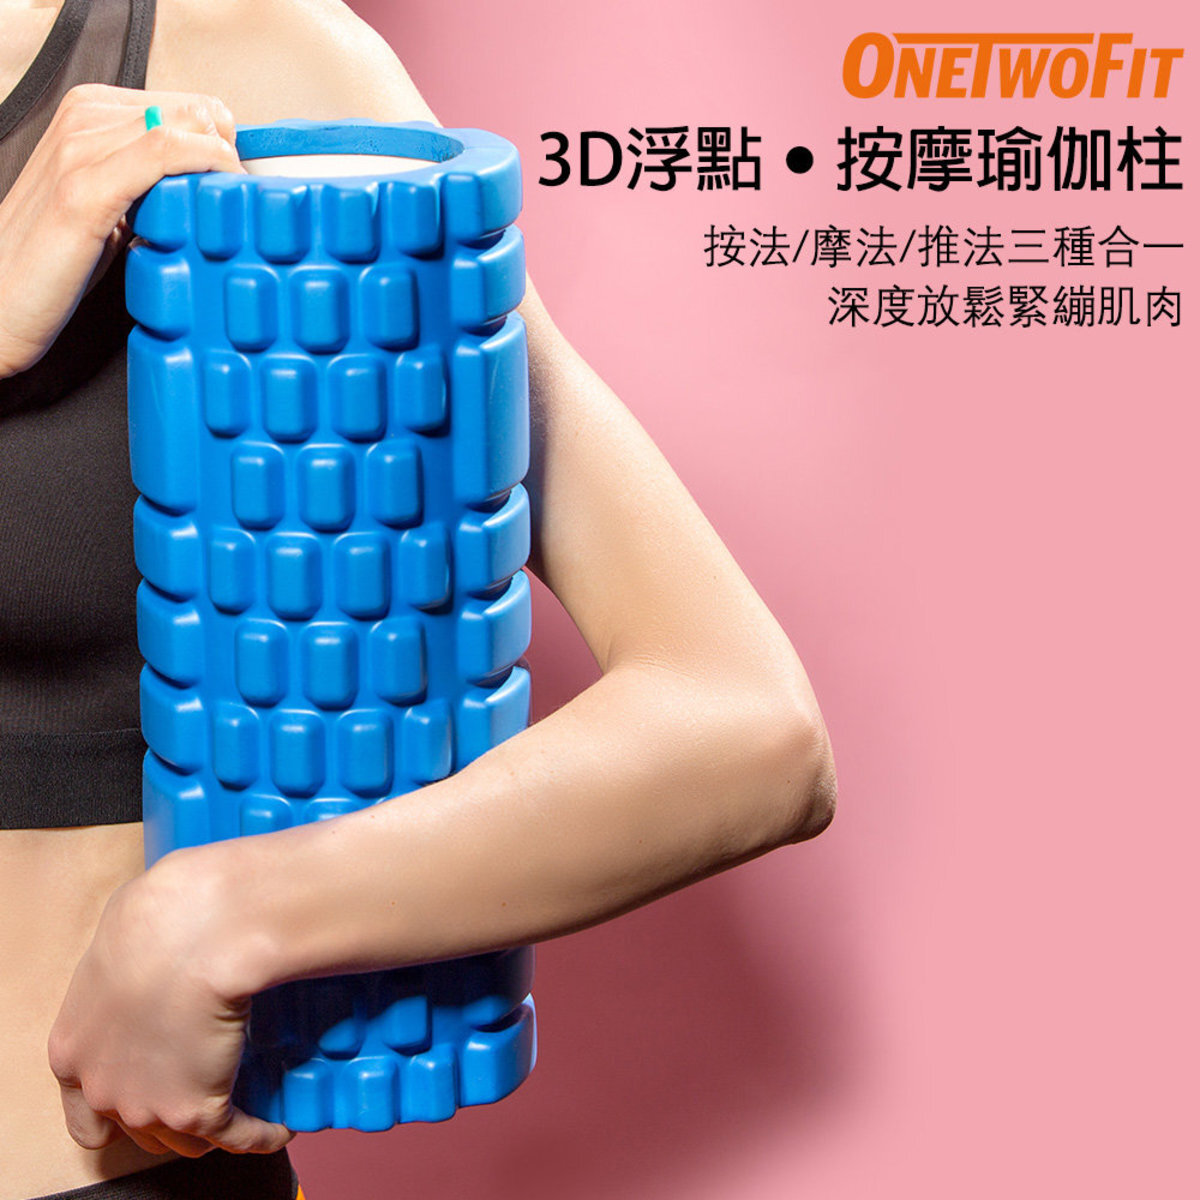 OT145B 健身按摩瑜伽柱 瘦腿肌肉放鬆 3D滾輪瑜伽柱 泡沫軸肌肉放鬆 藍色